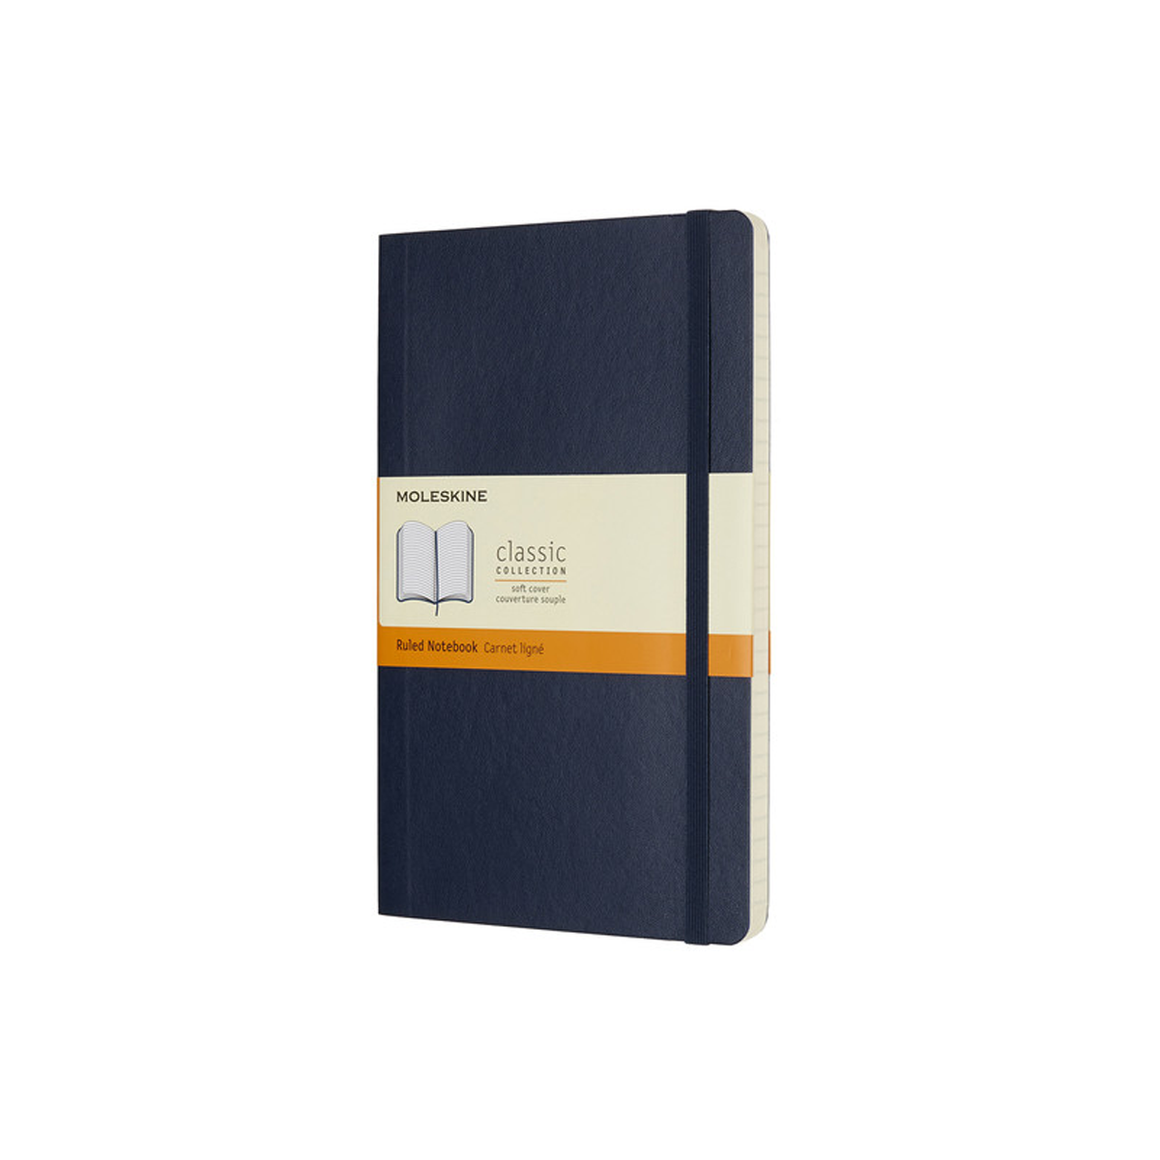 Softcover notebook | Moleskine | ruled | large